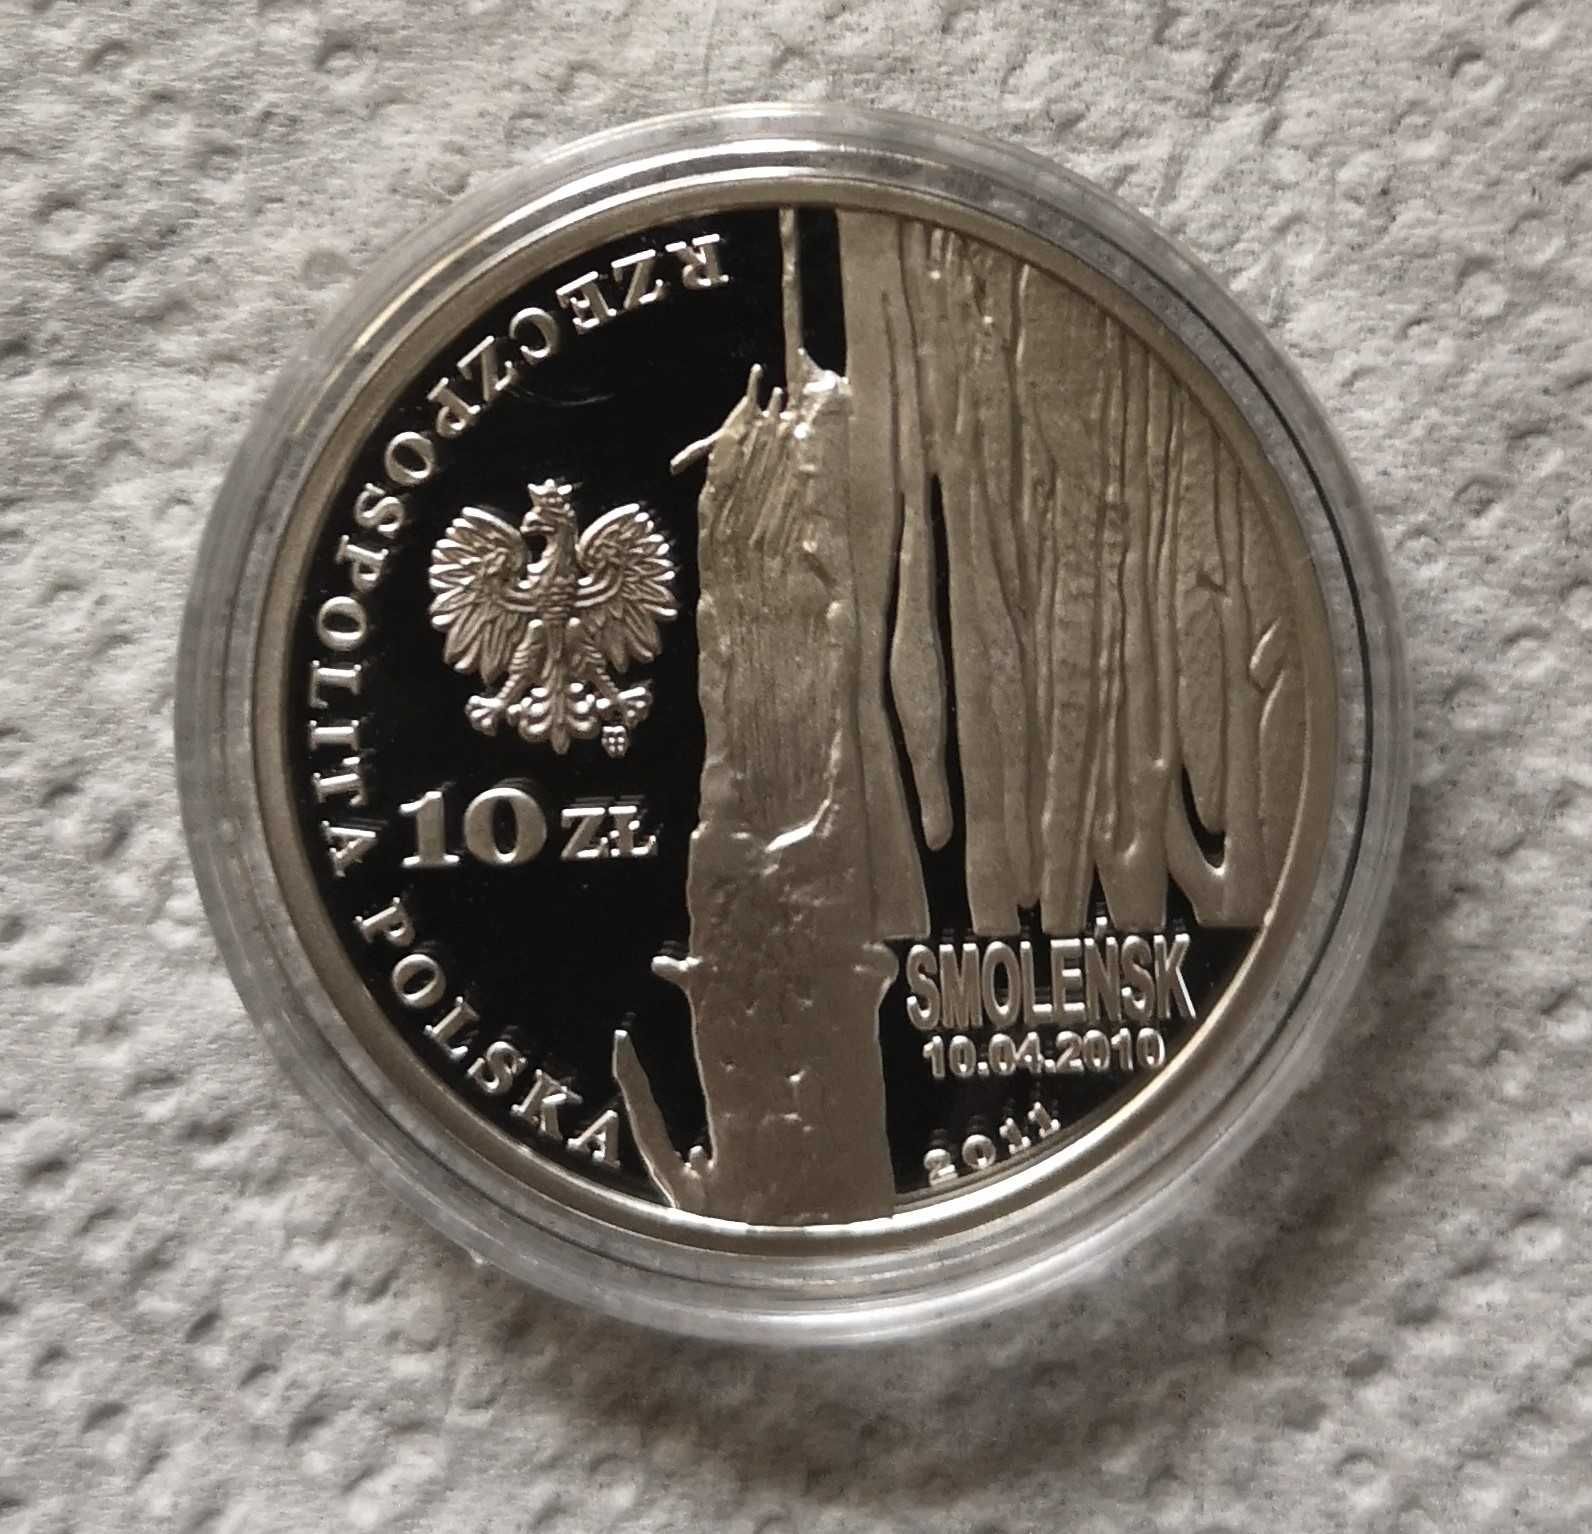 Moneta kolekcjonerska 10 zł 2011 r. Smoleńsk Sławomir Skrzypek